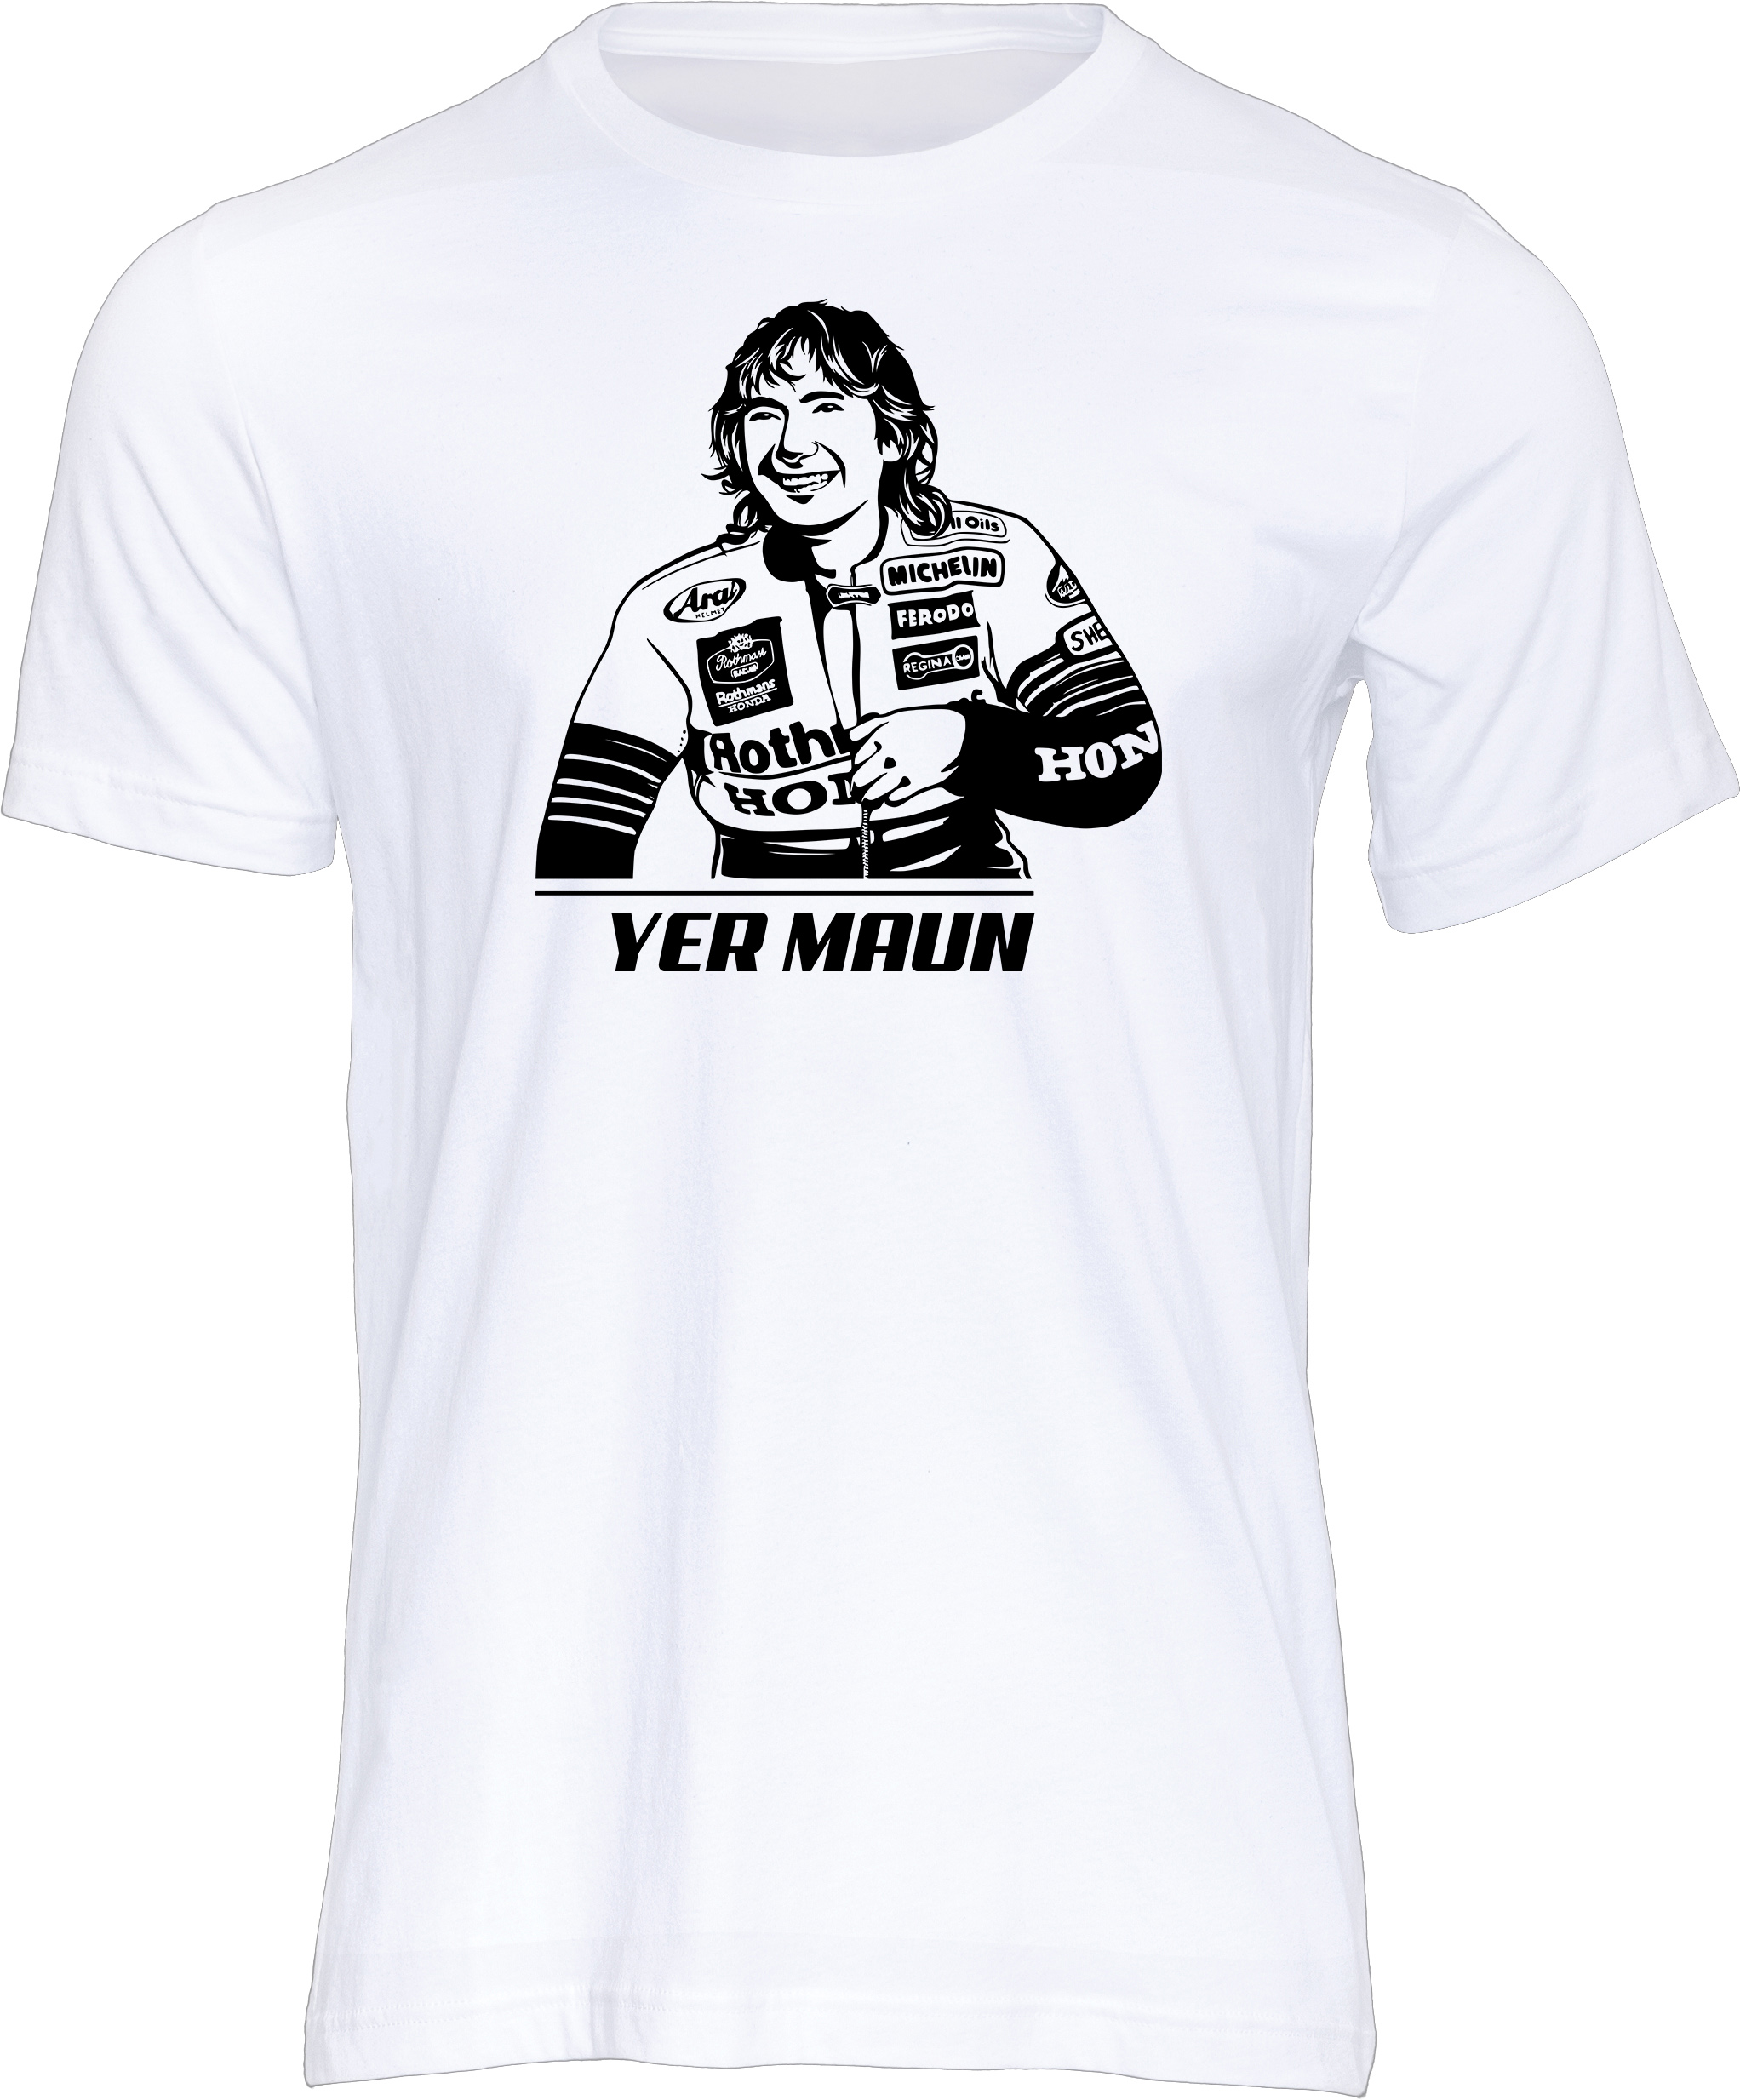 Joey Dunlop - Yer Maun T-shirt, White